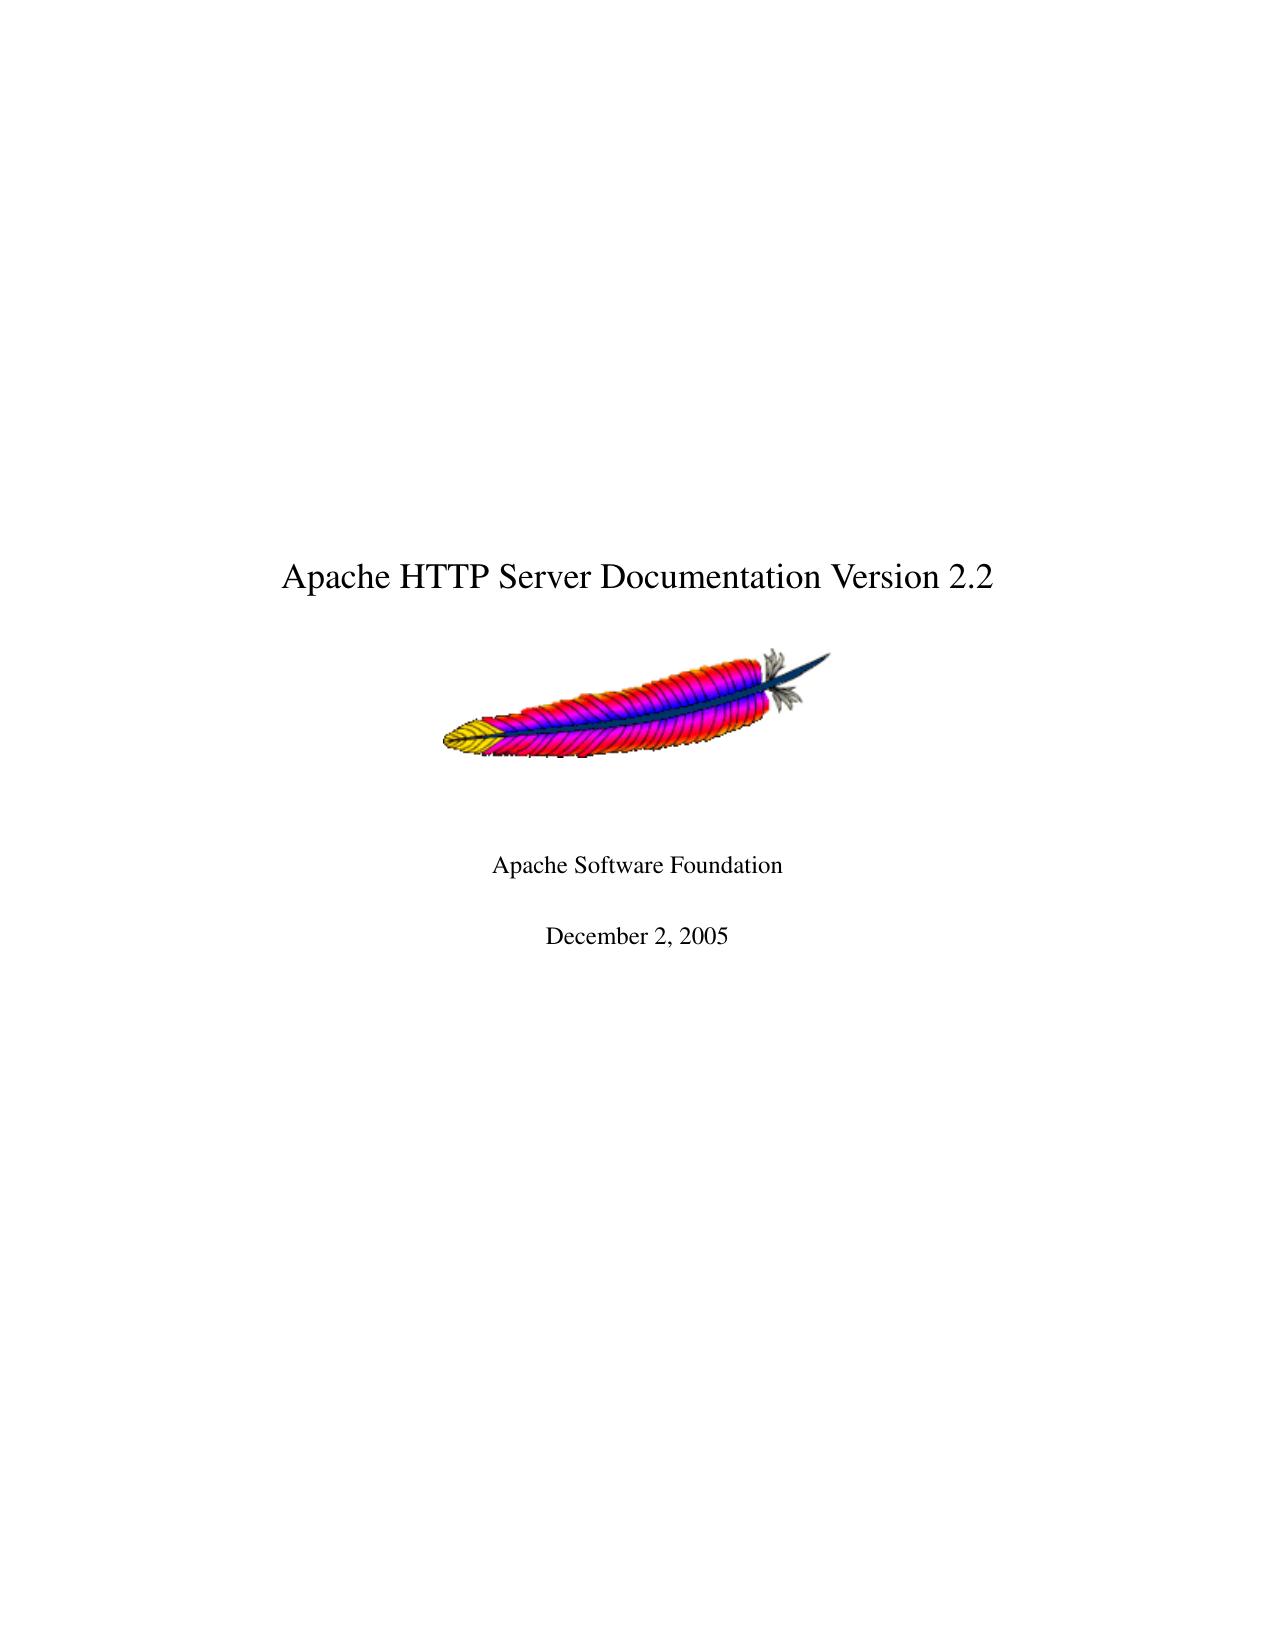 Apache HTTP Server Documentation Version 2.2